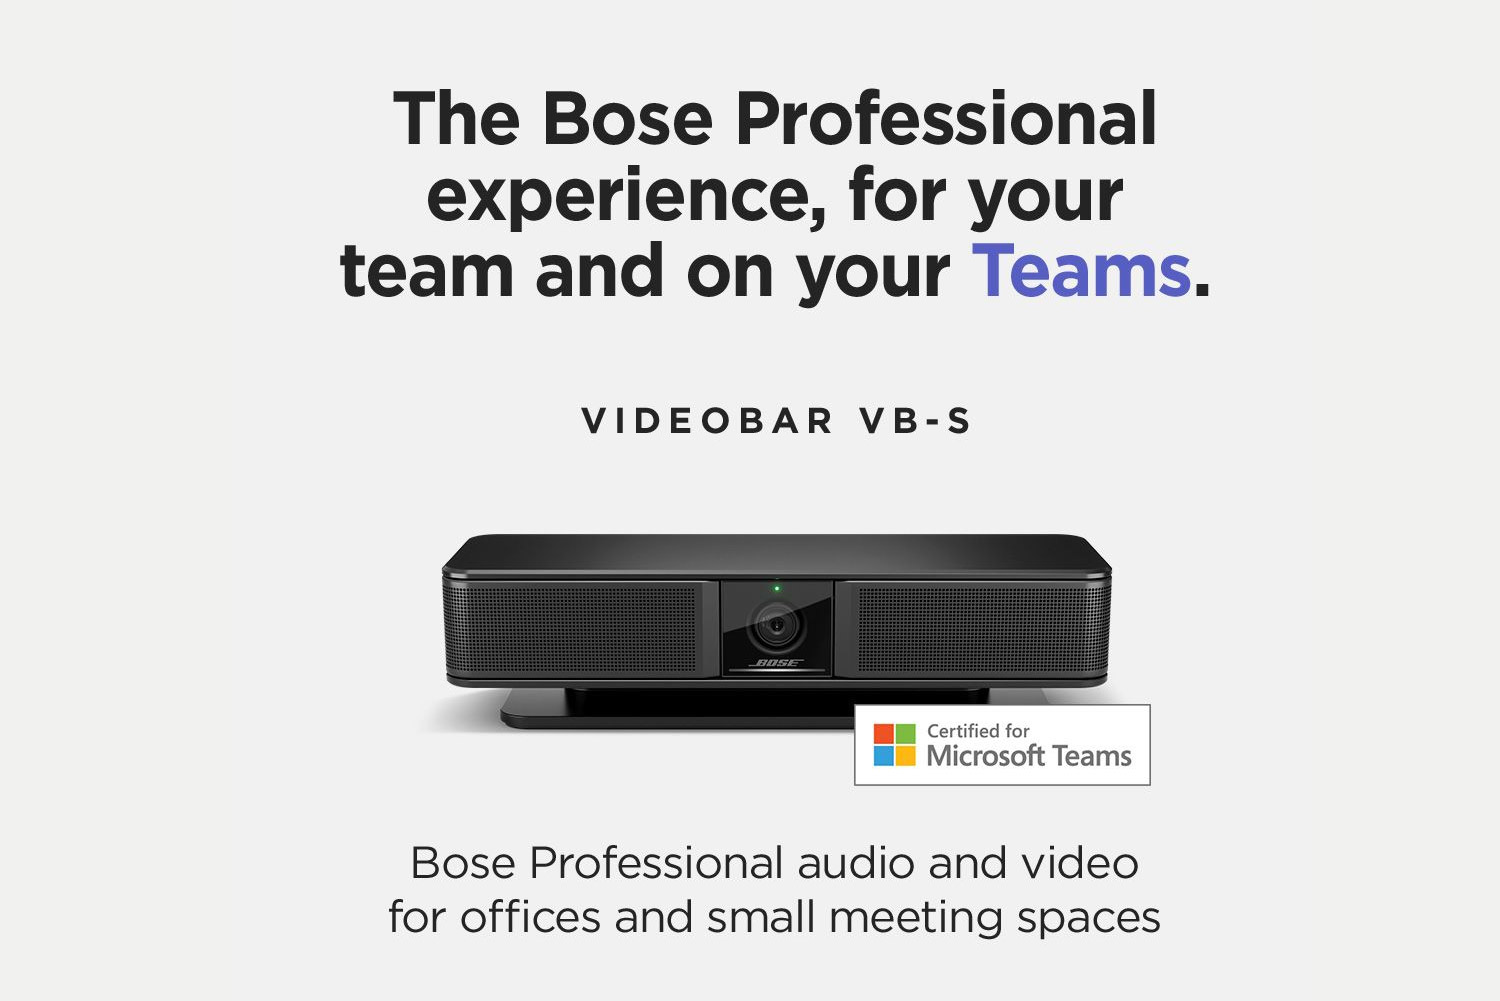 Bose Videobar VB-S is certified for Microsoft Teams